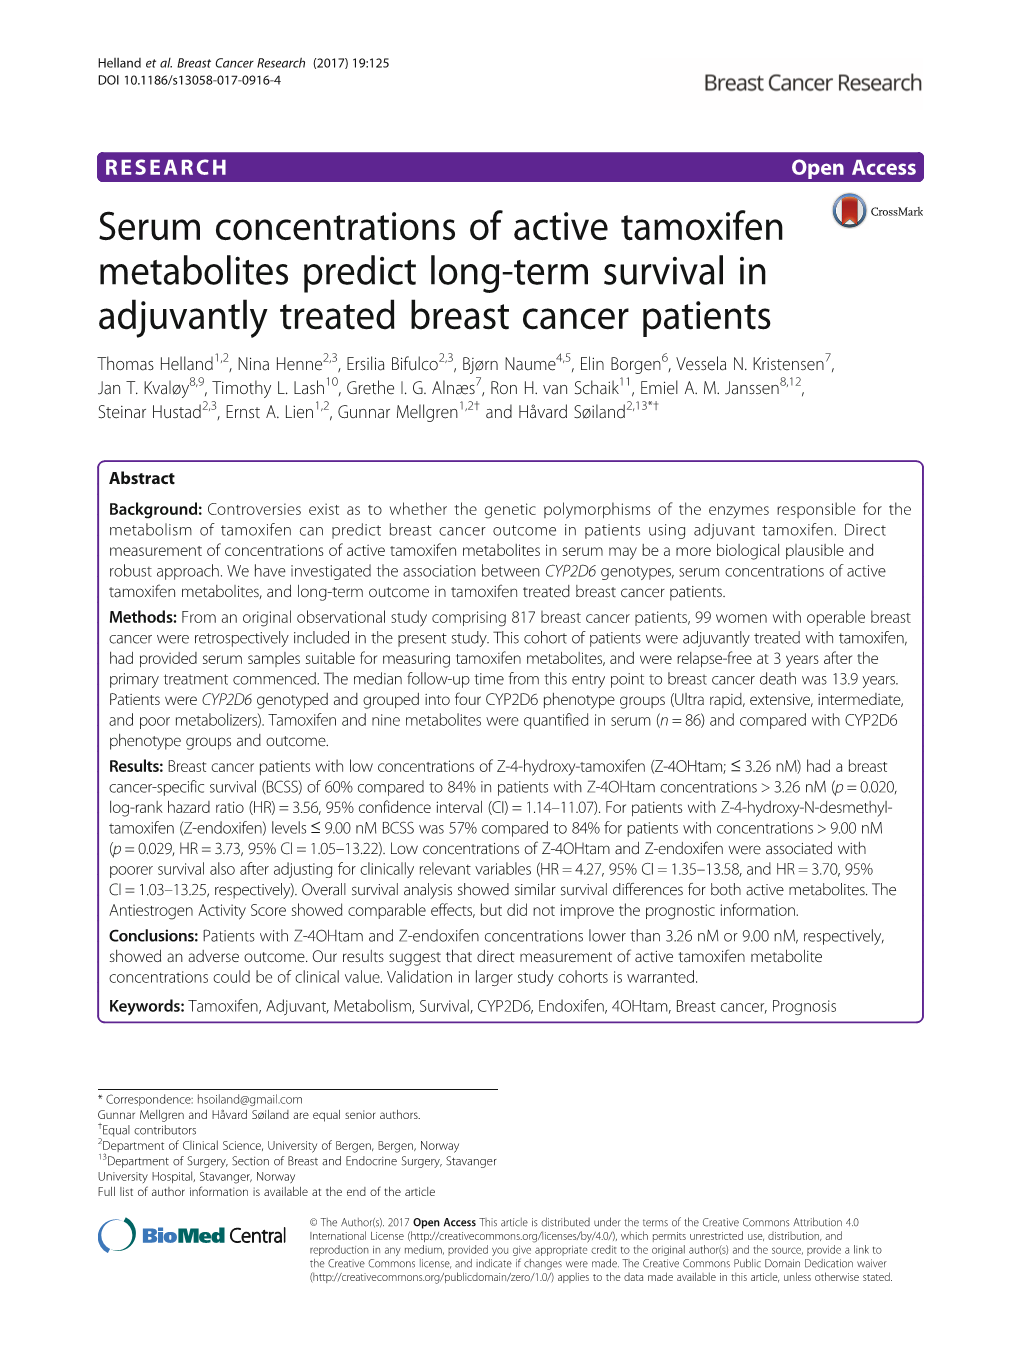 Serum Concentrations of Active Tamoxifen Metabolites Predict Long